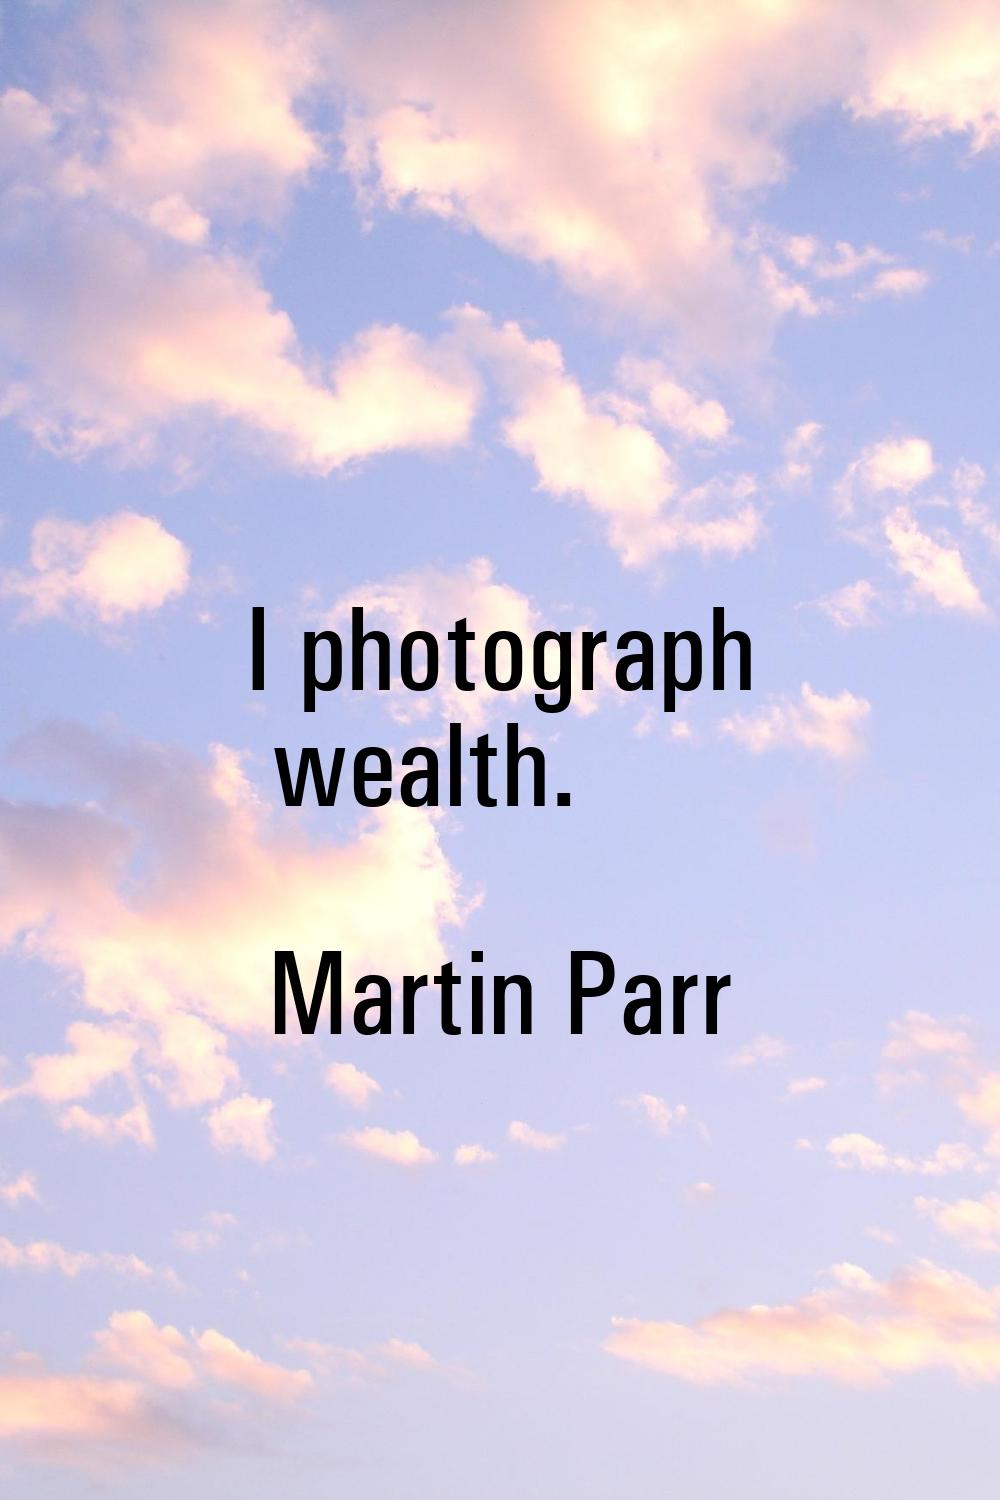 I photograph wealth.